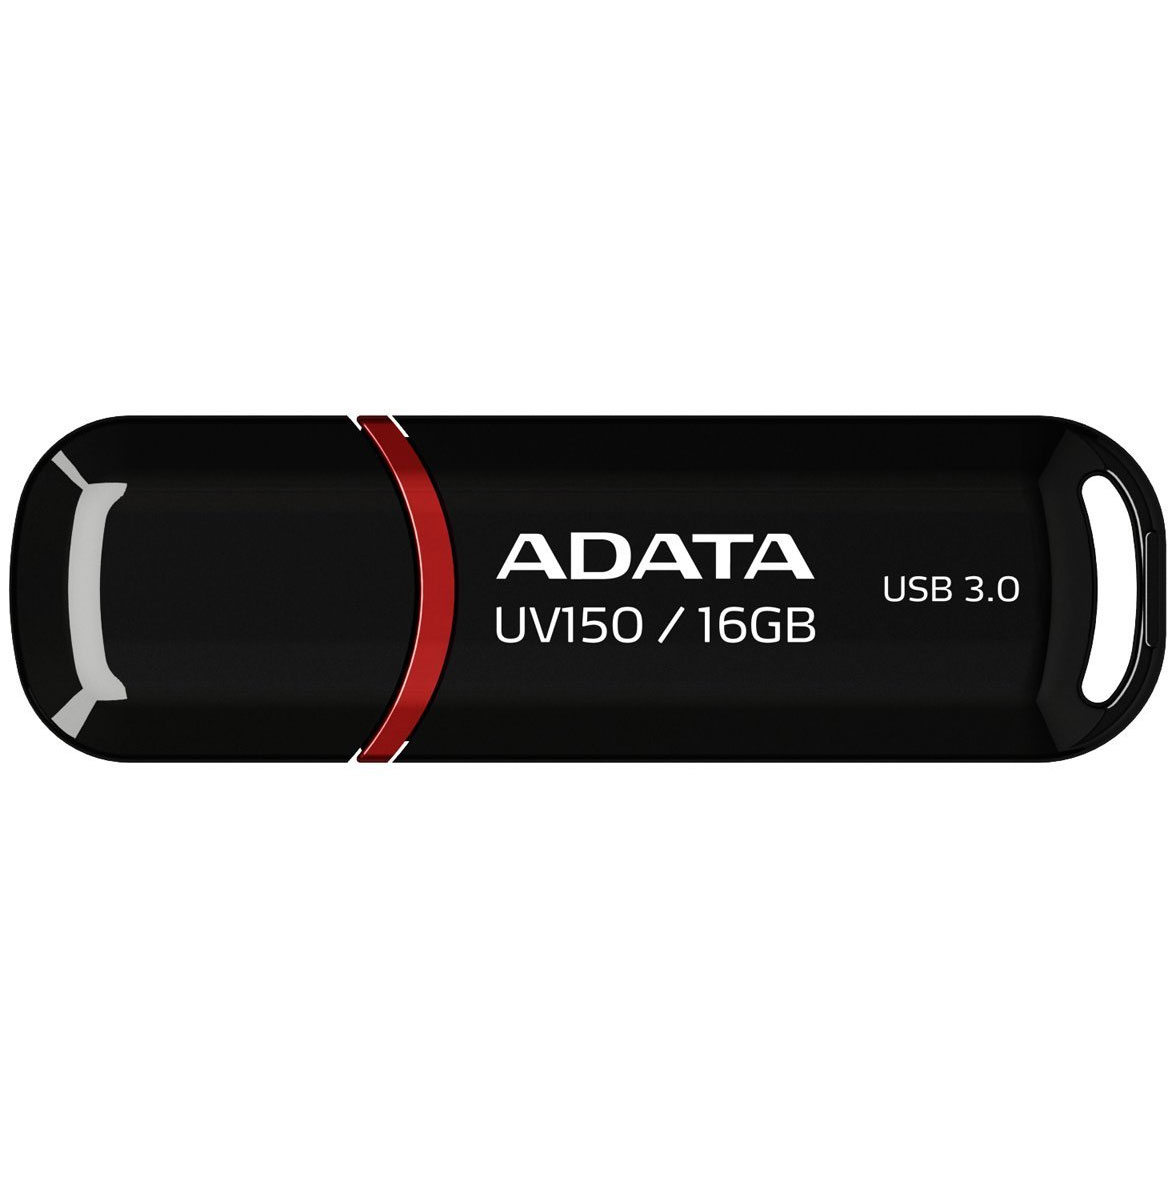  Memorie USB A-DATA AUV150-16G-RBK, 16GB, USB 3.0, Negru 